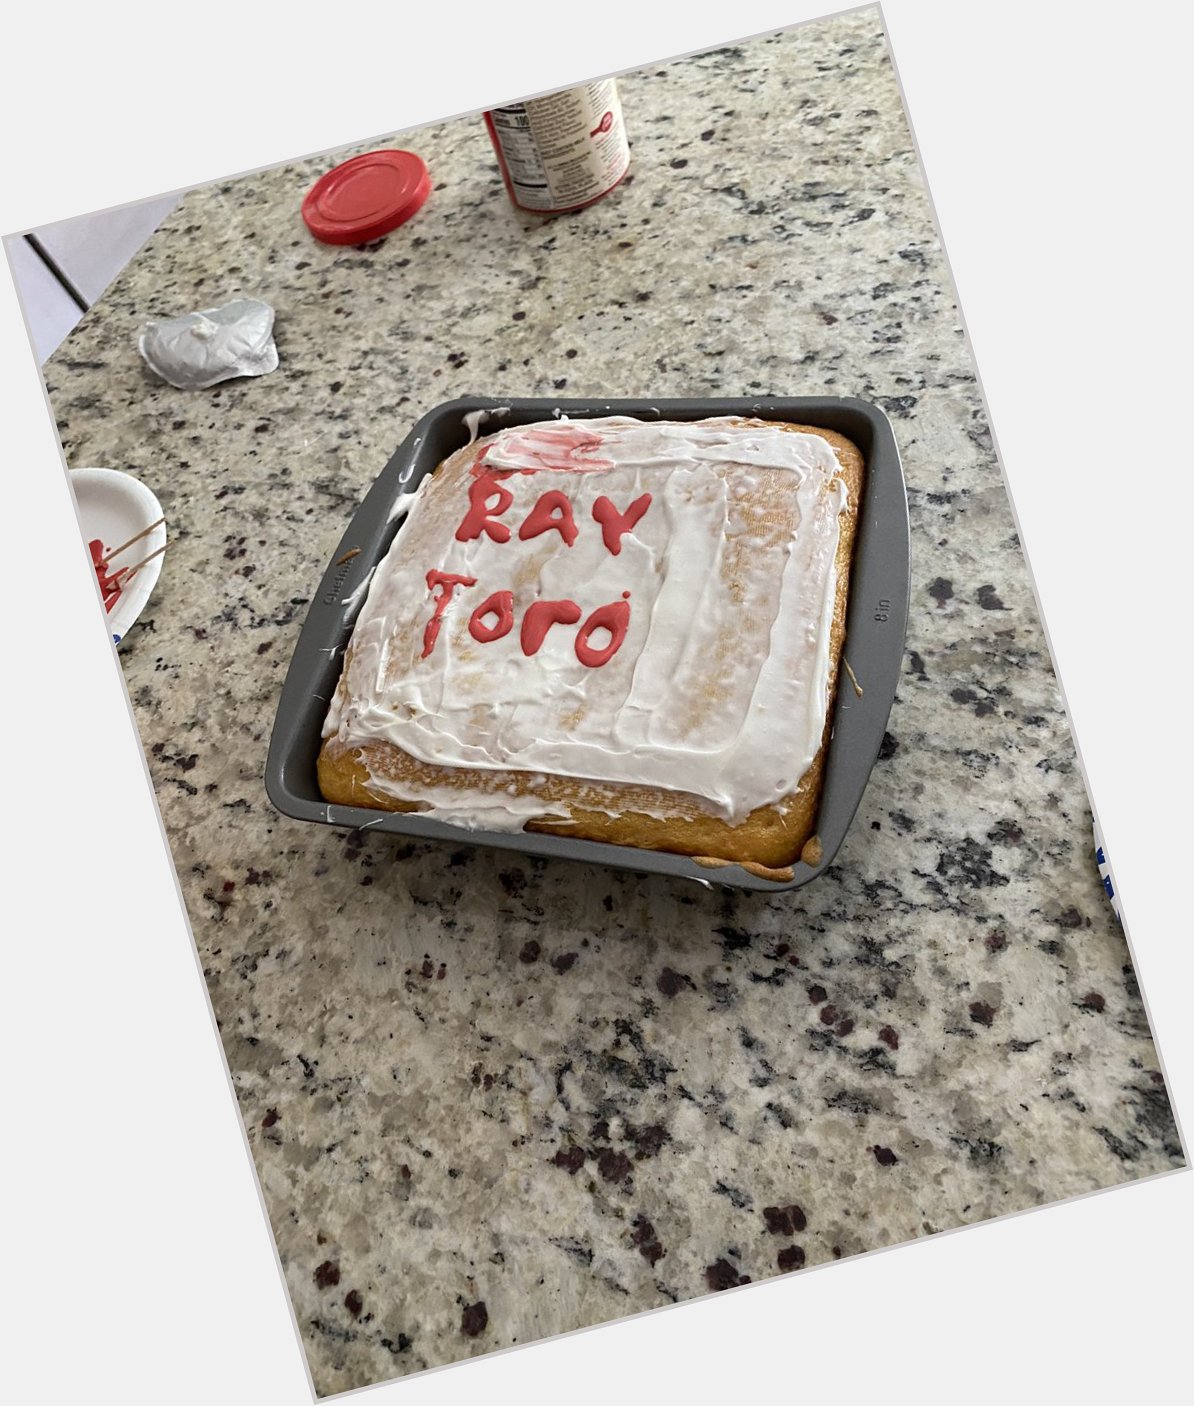 Ray toro cake!!! happy birthday!!!!   